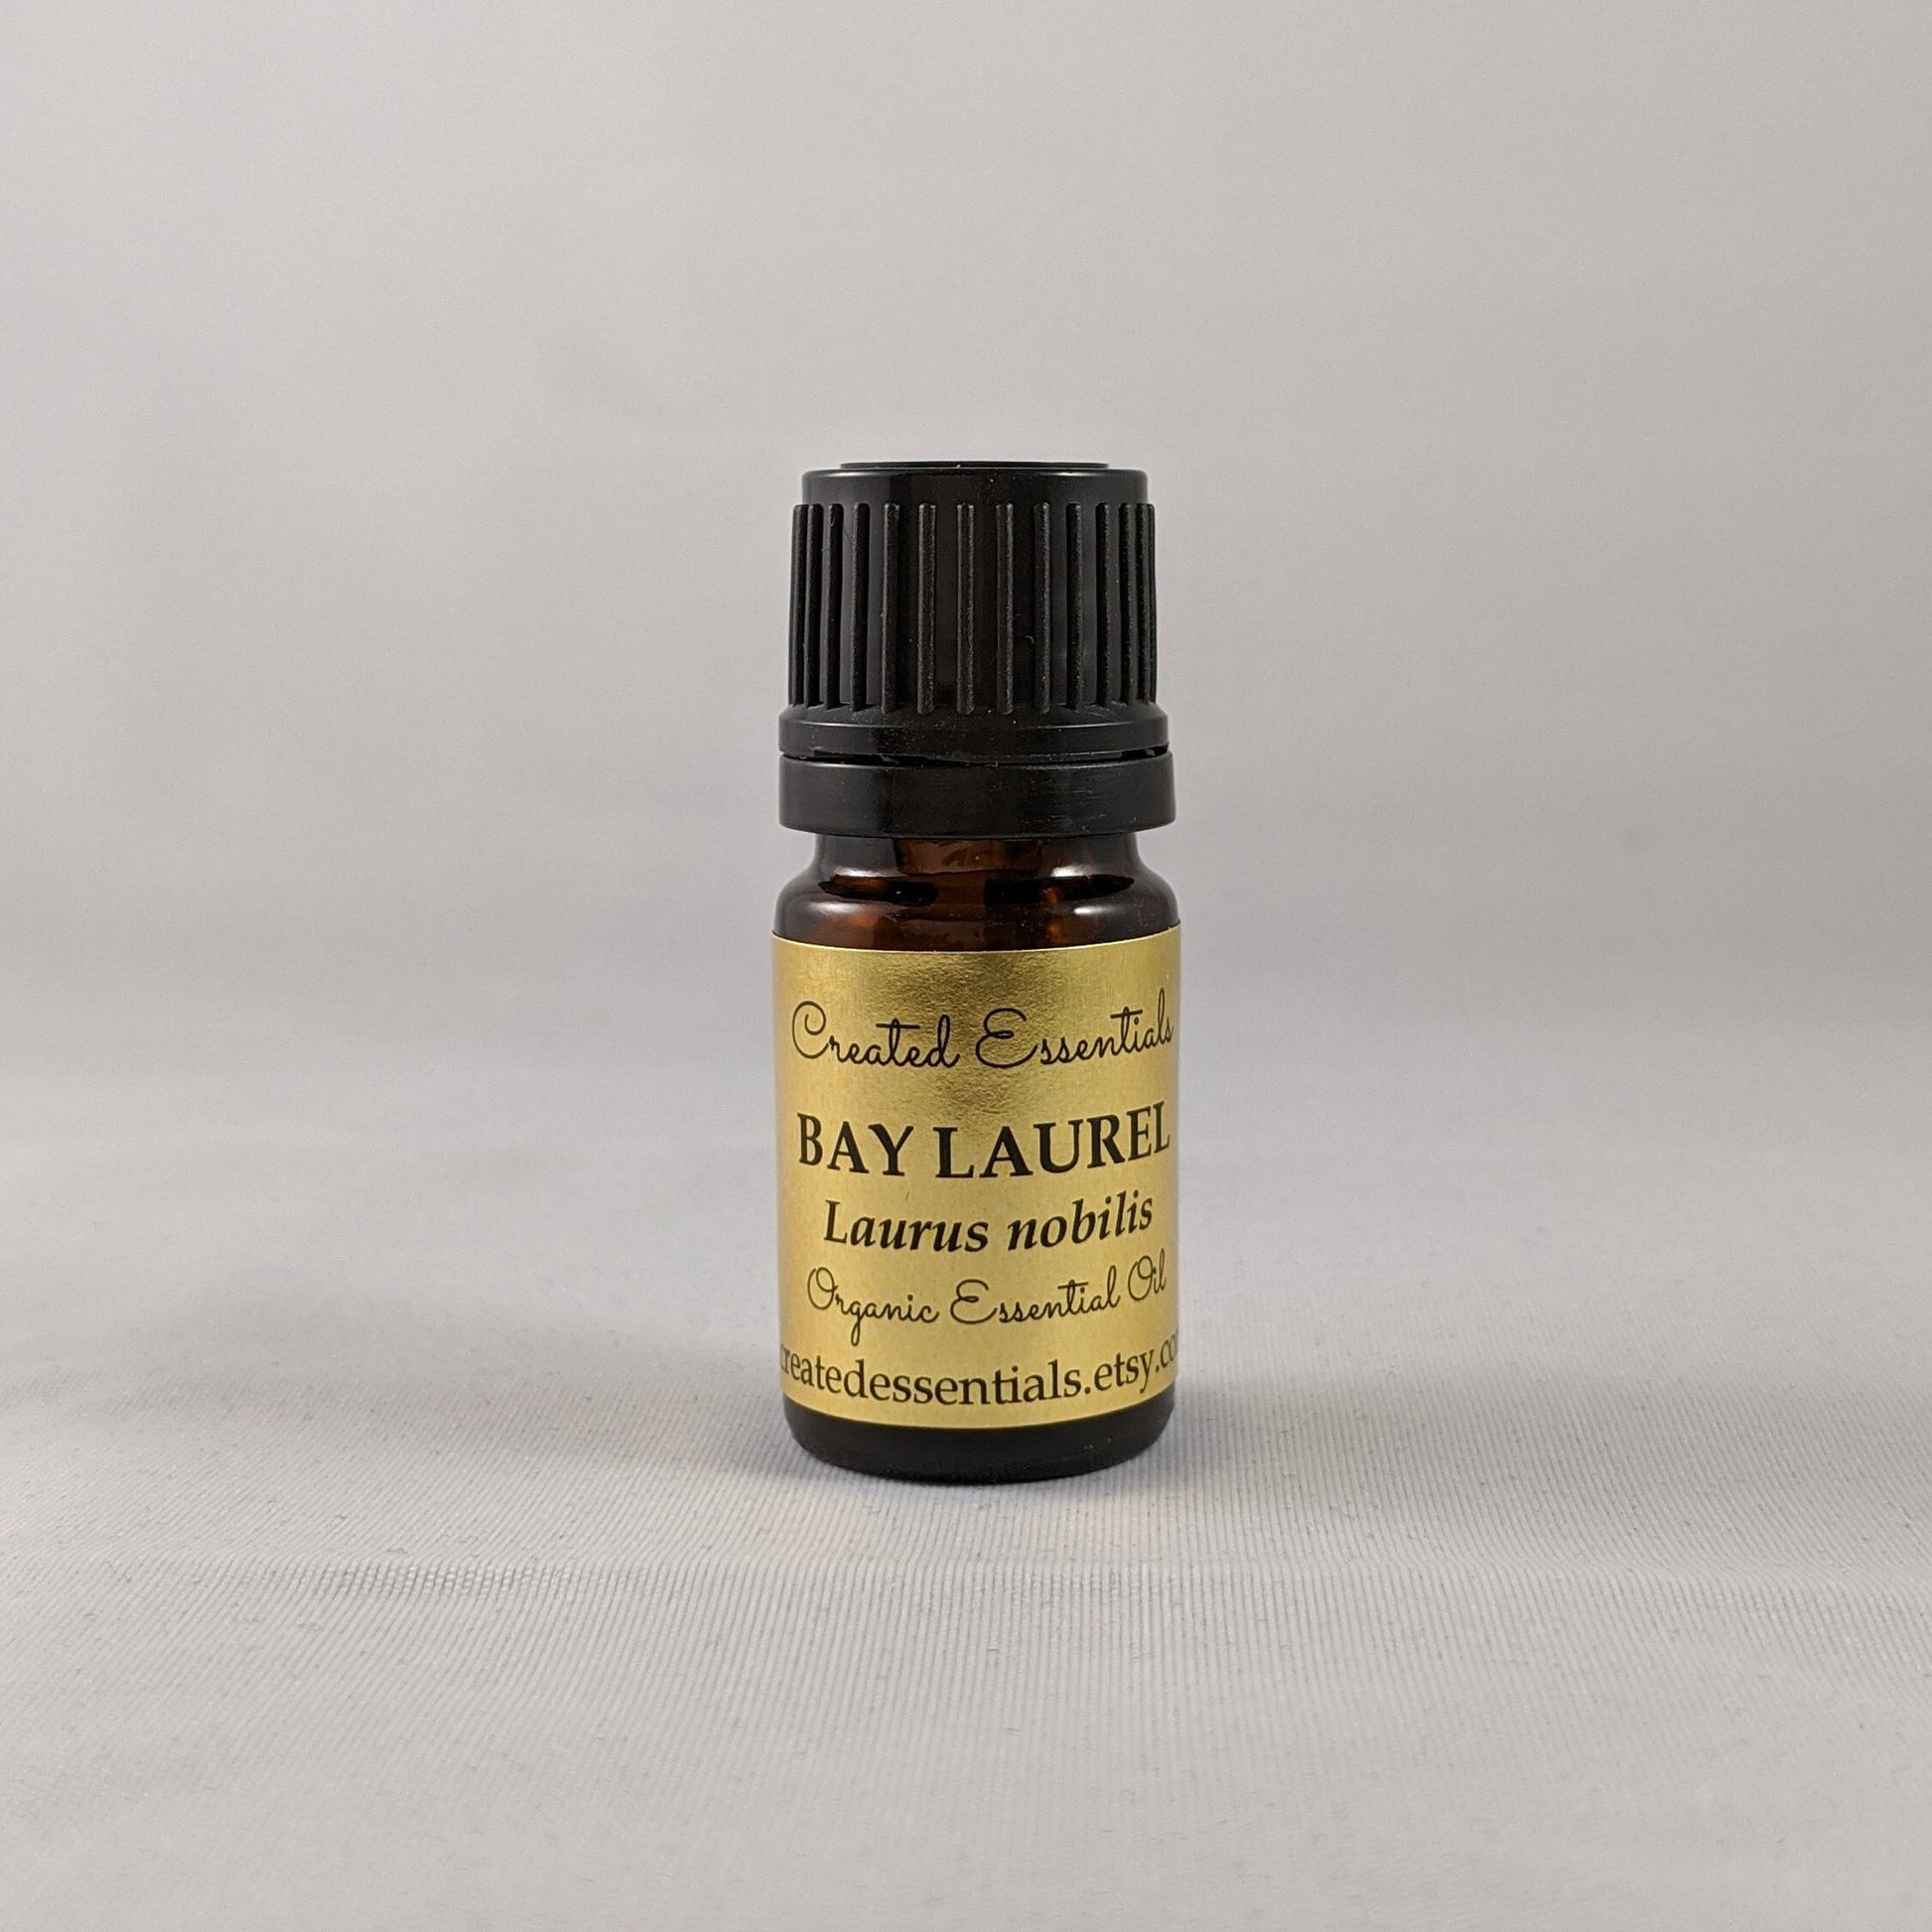 Bay Laurel Essential Oil | Organic Bay Laurel Essential Oil | Pure Essential Oil | Therapeutic Essential Oil of Bay Laurel, Laurus nobilis